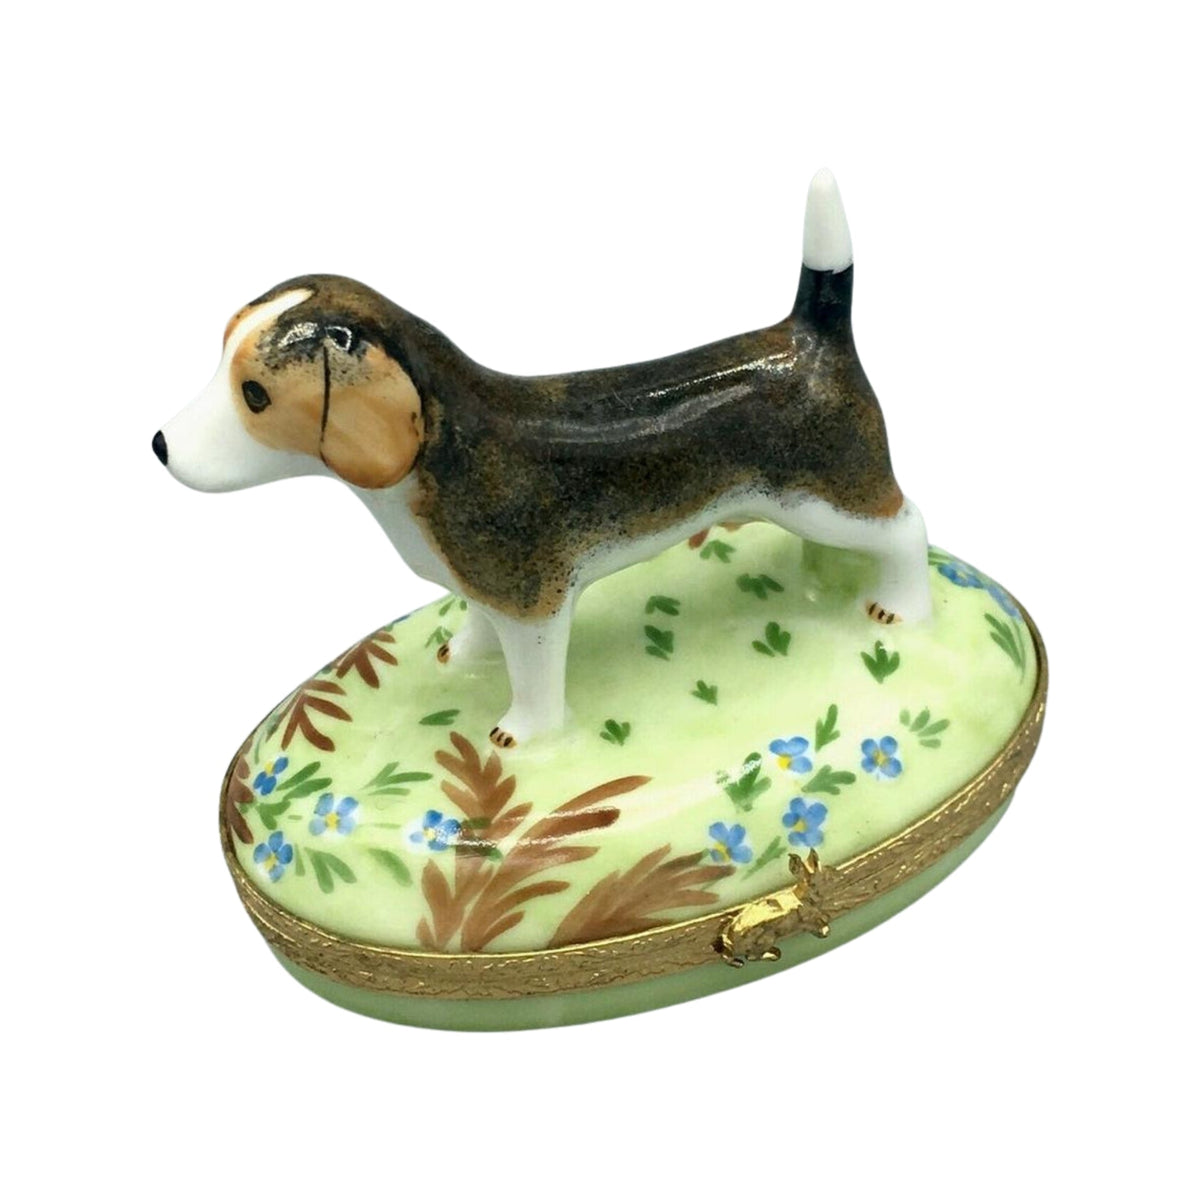 Happy beagle dog sitting on a leash next to a dog bowl